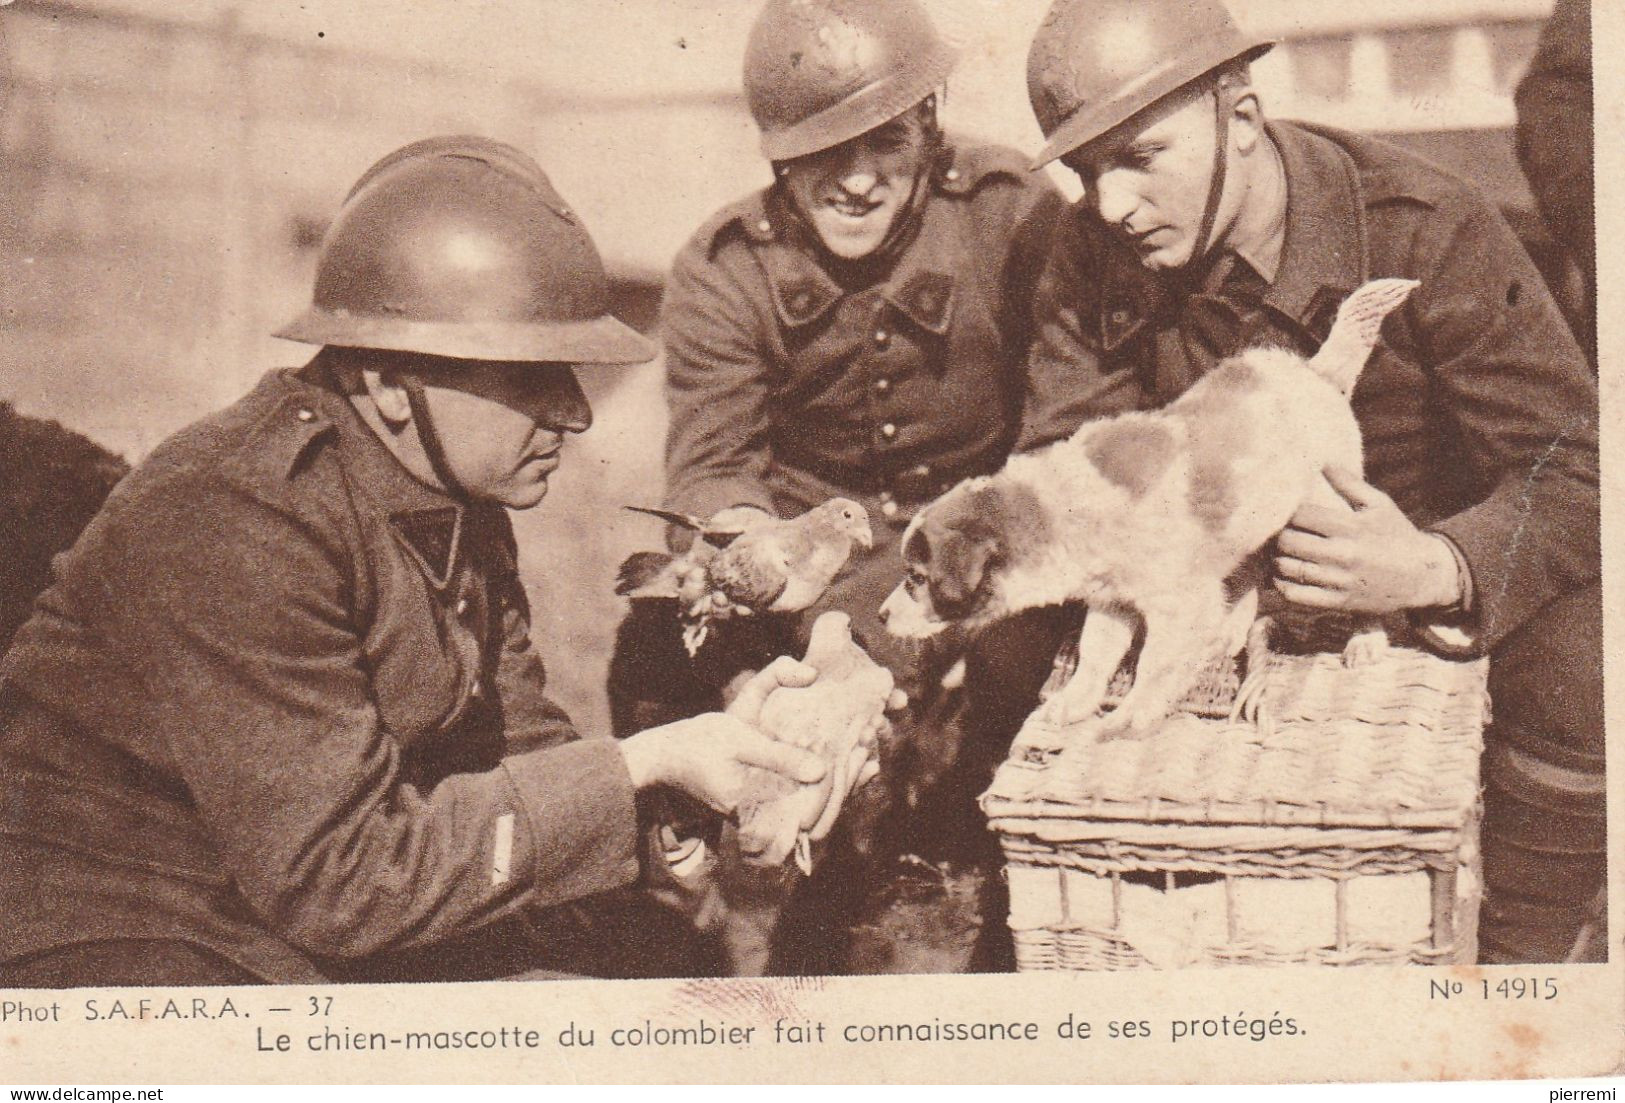 Photo France Press No.14915 - War 1939-45